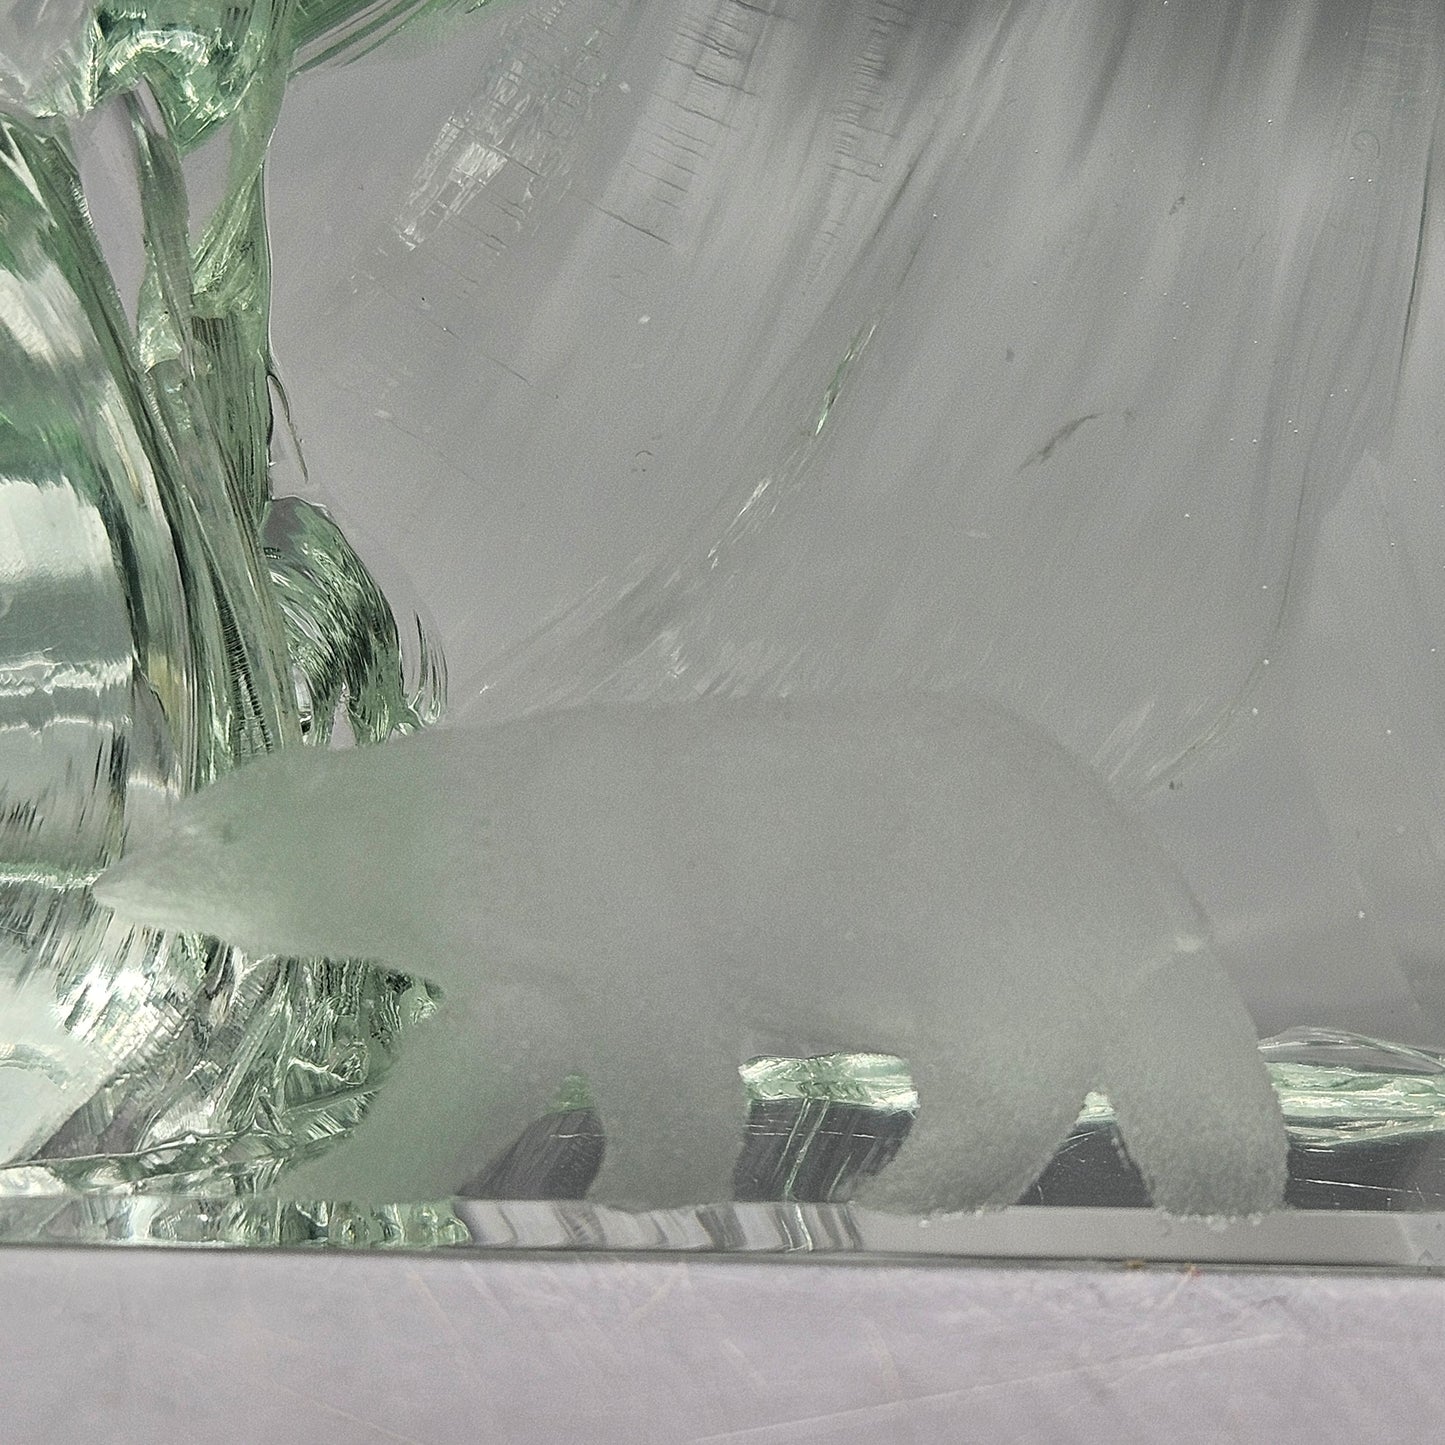 Kosta Boda Vicke Lindstrand Crystal Cut Art Glass Ice Block Sculpture with Polar Bears